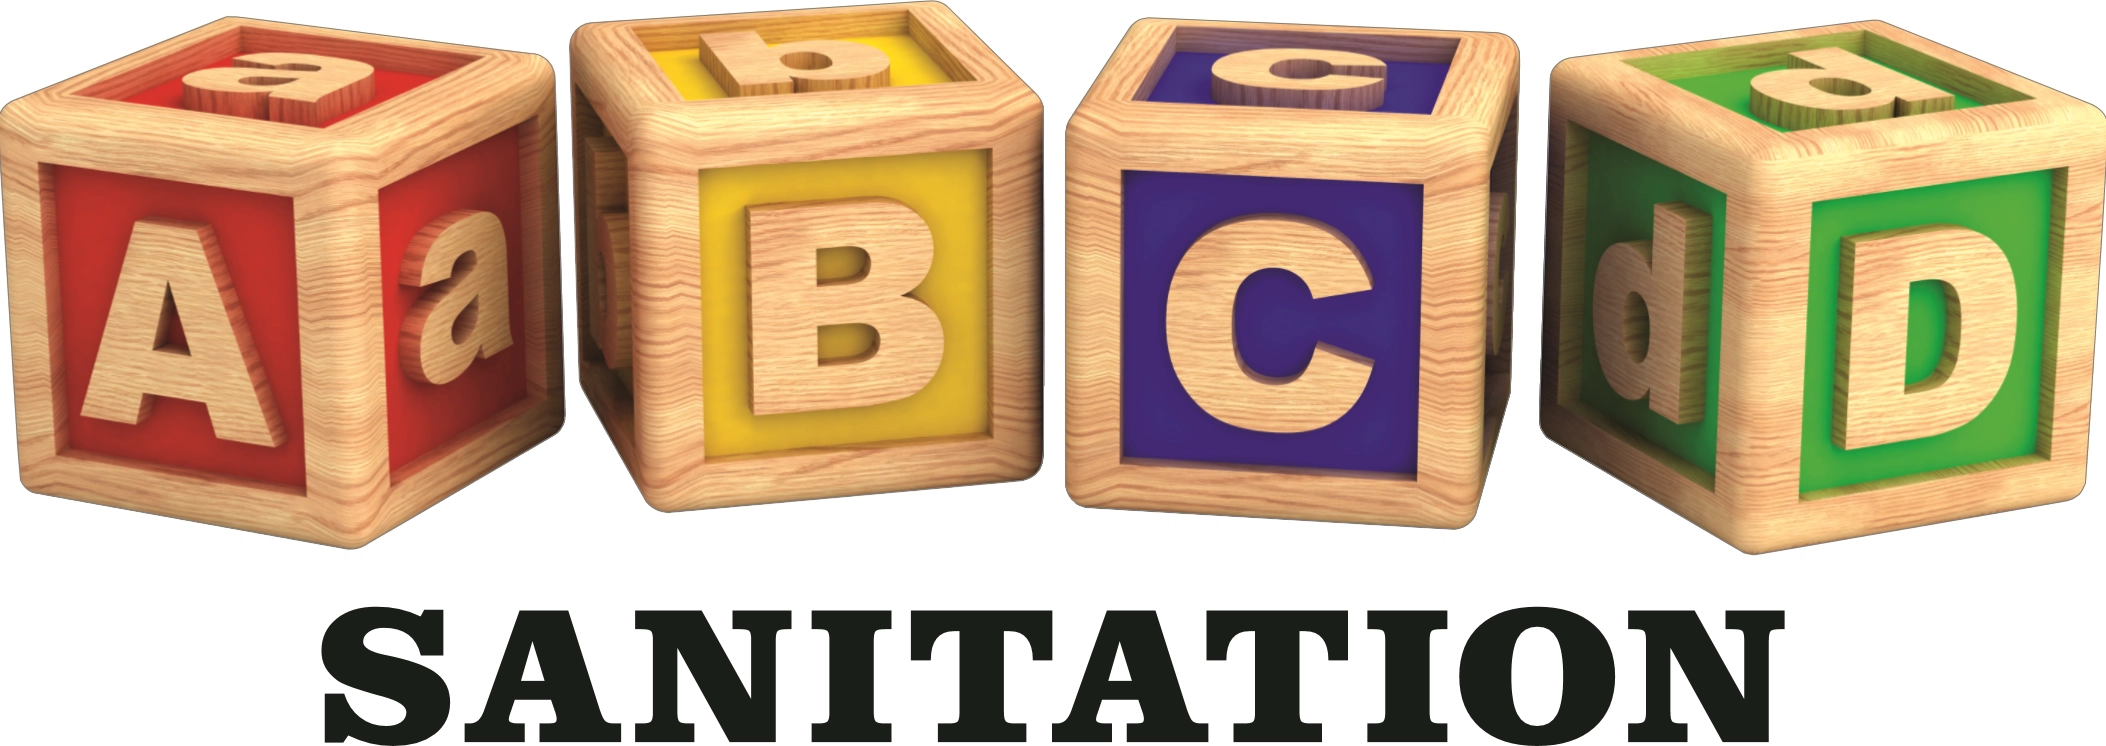 ABCD SANITATION Logo